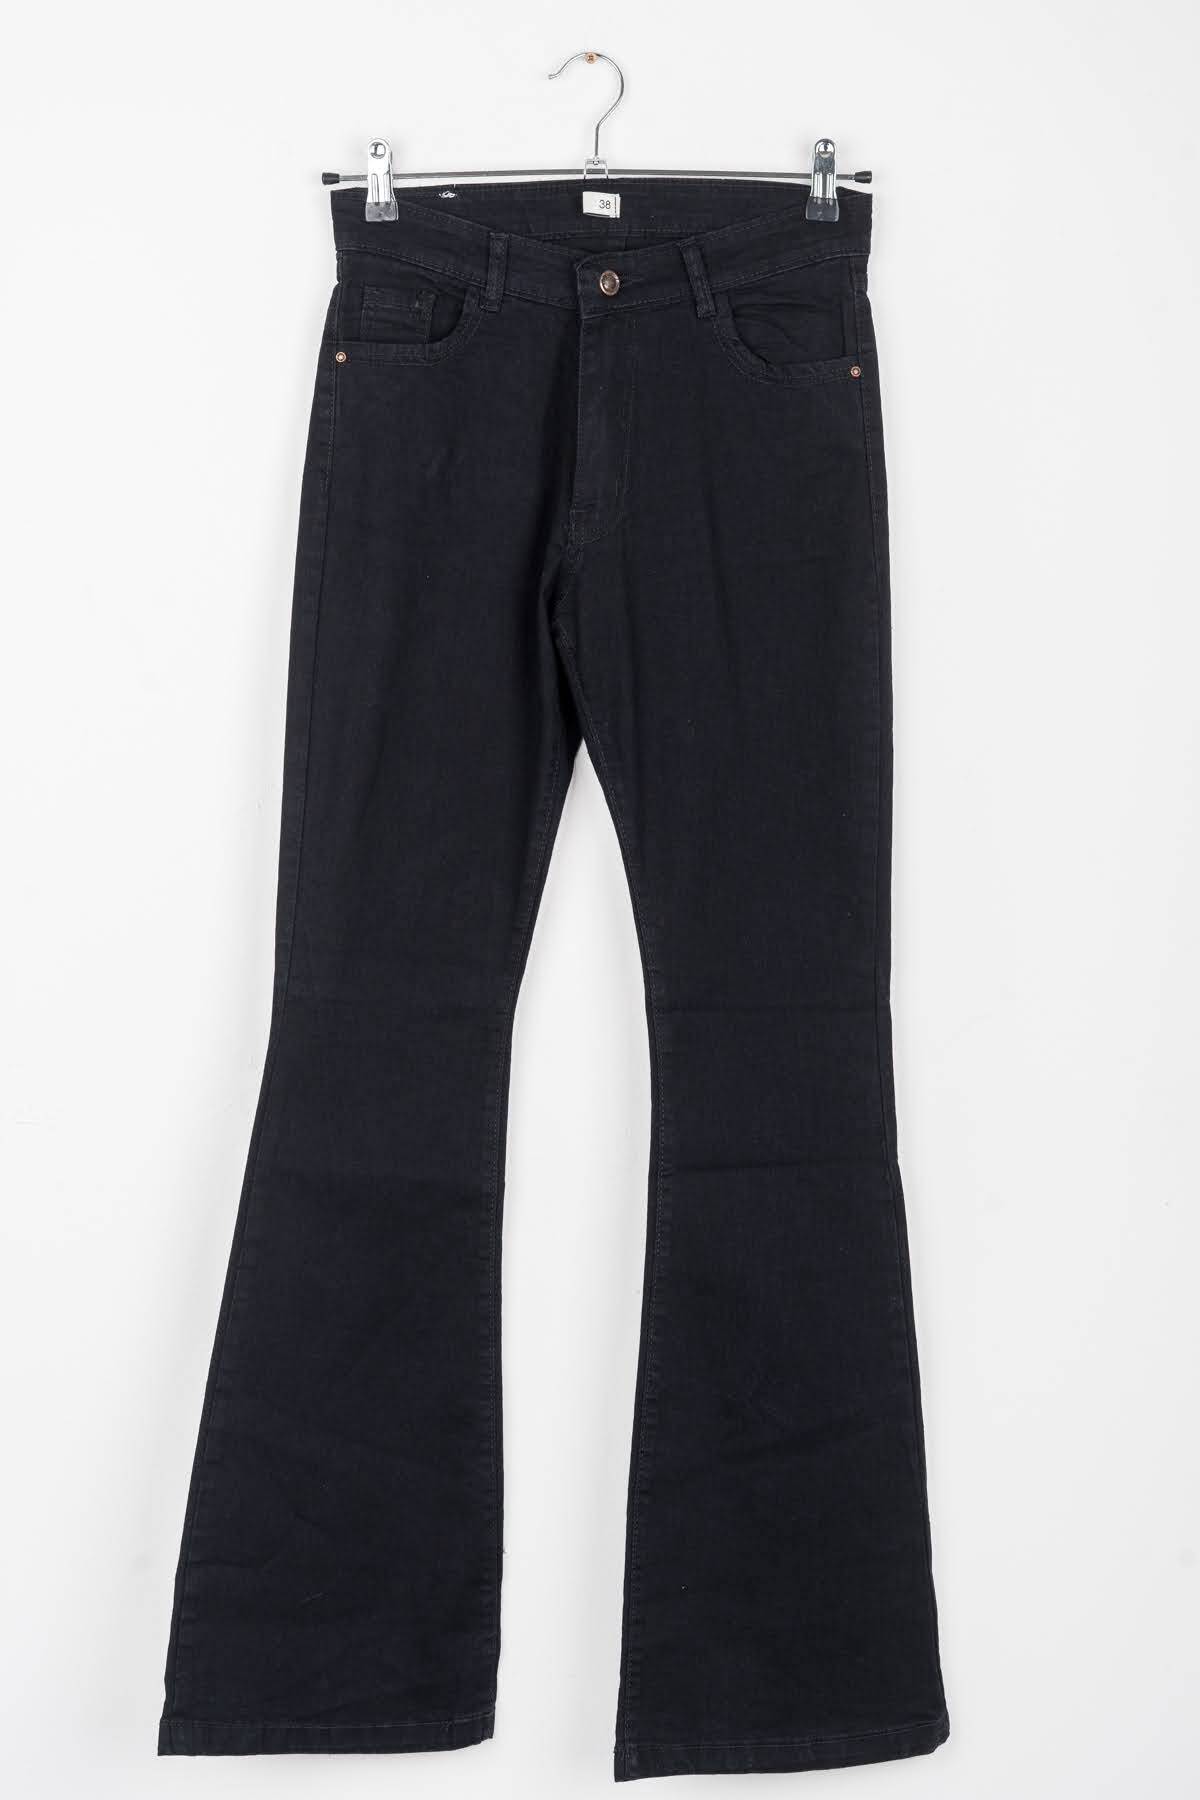 Imagen carrousel Pantalon Jeans oxford negro 3